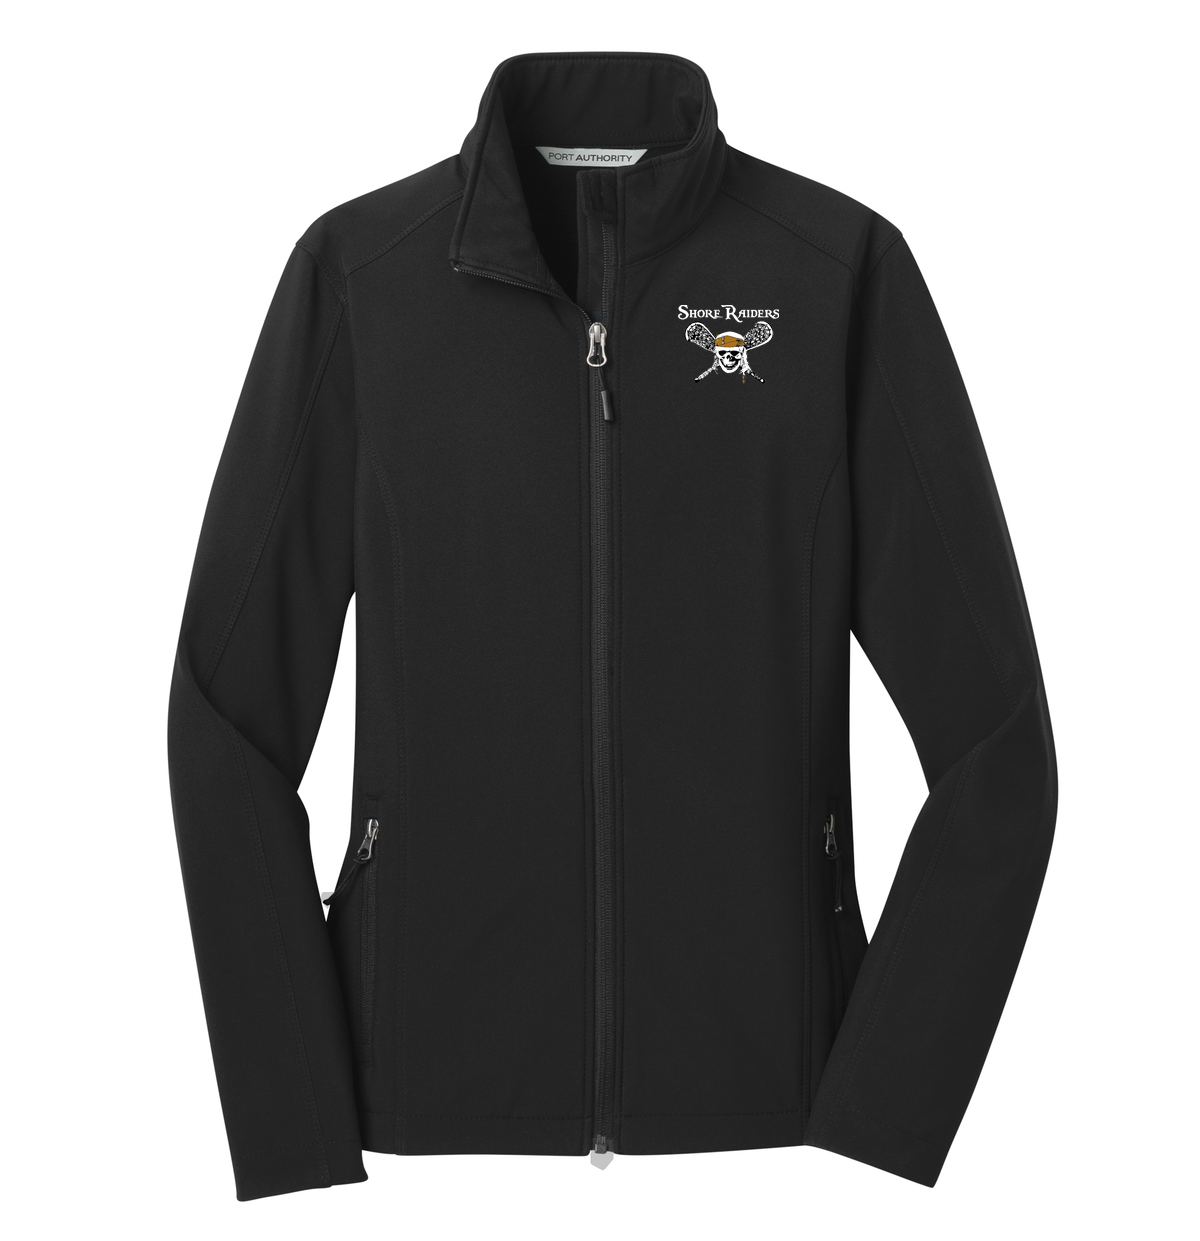 Shore Raiders Lacrosse Women's Soft Shell Jacket